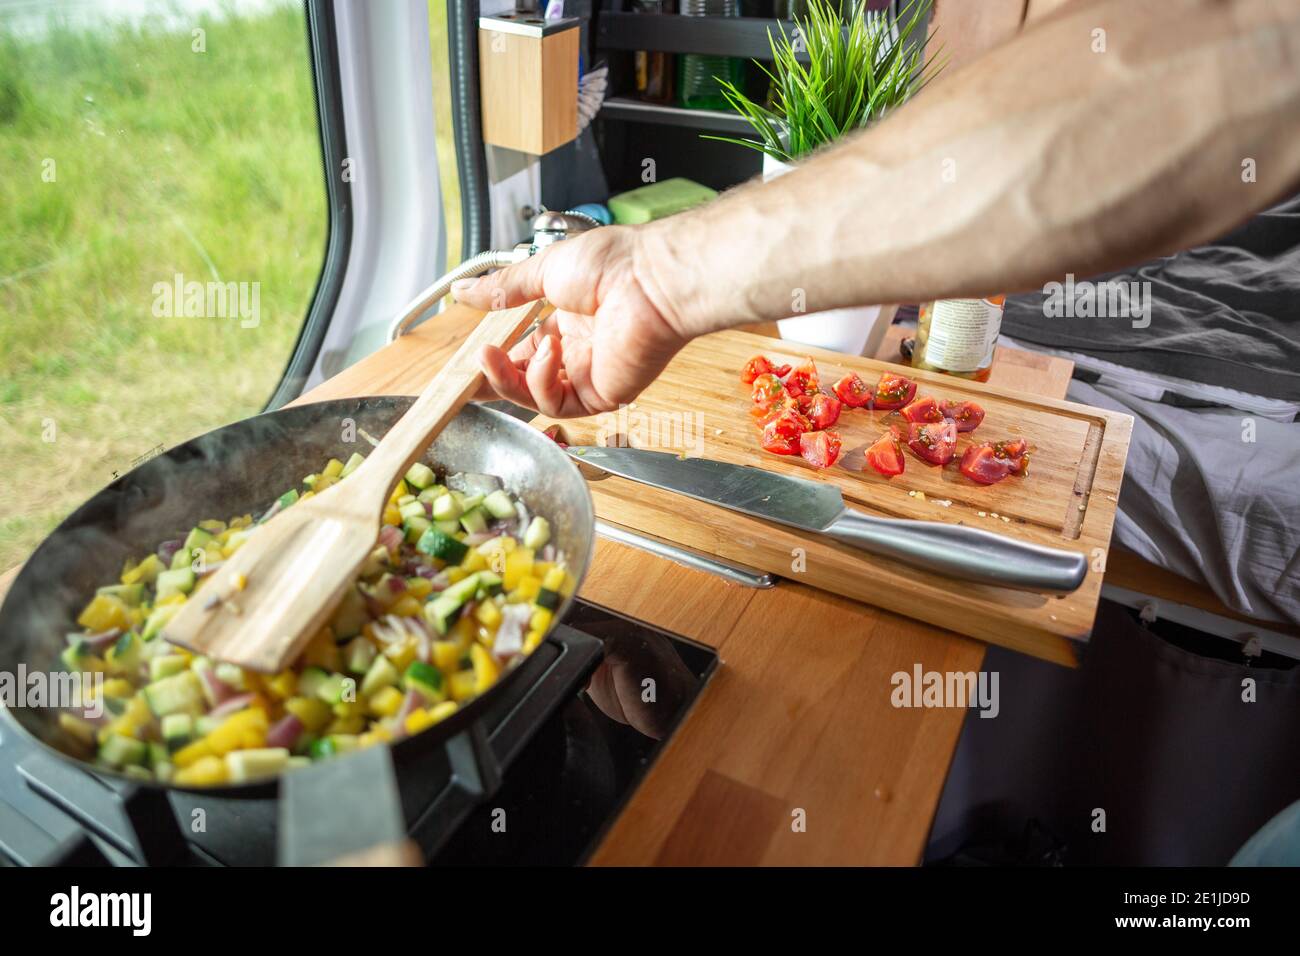 Cooking food inside a caravan Stock Photo